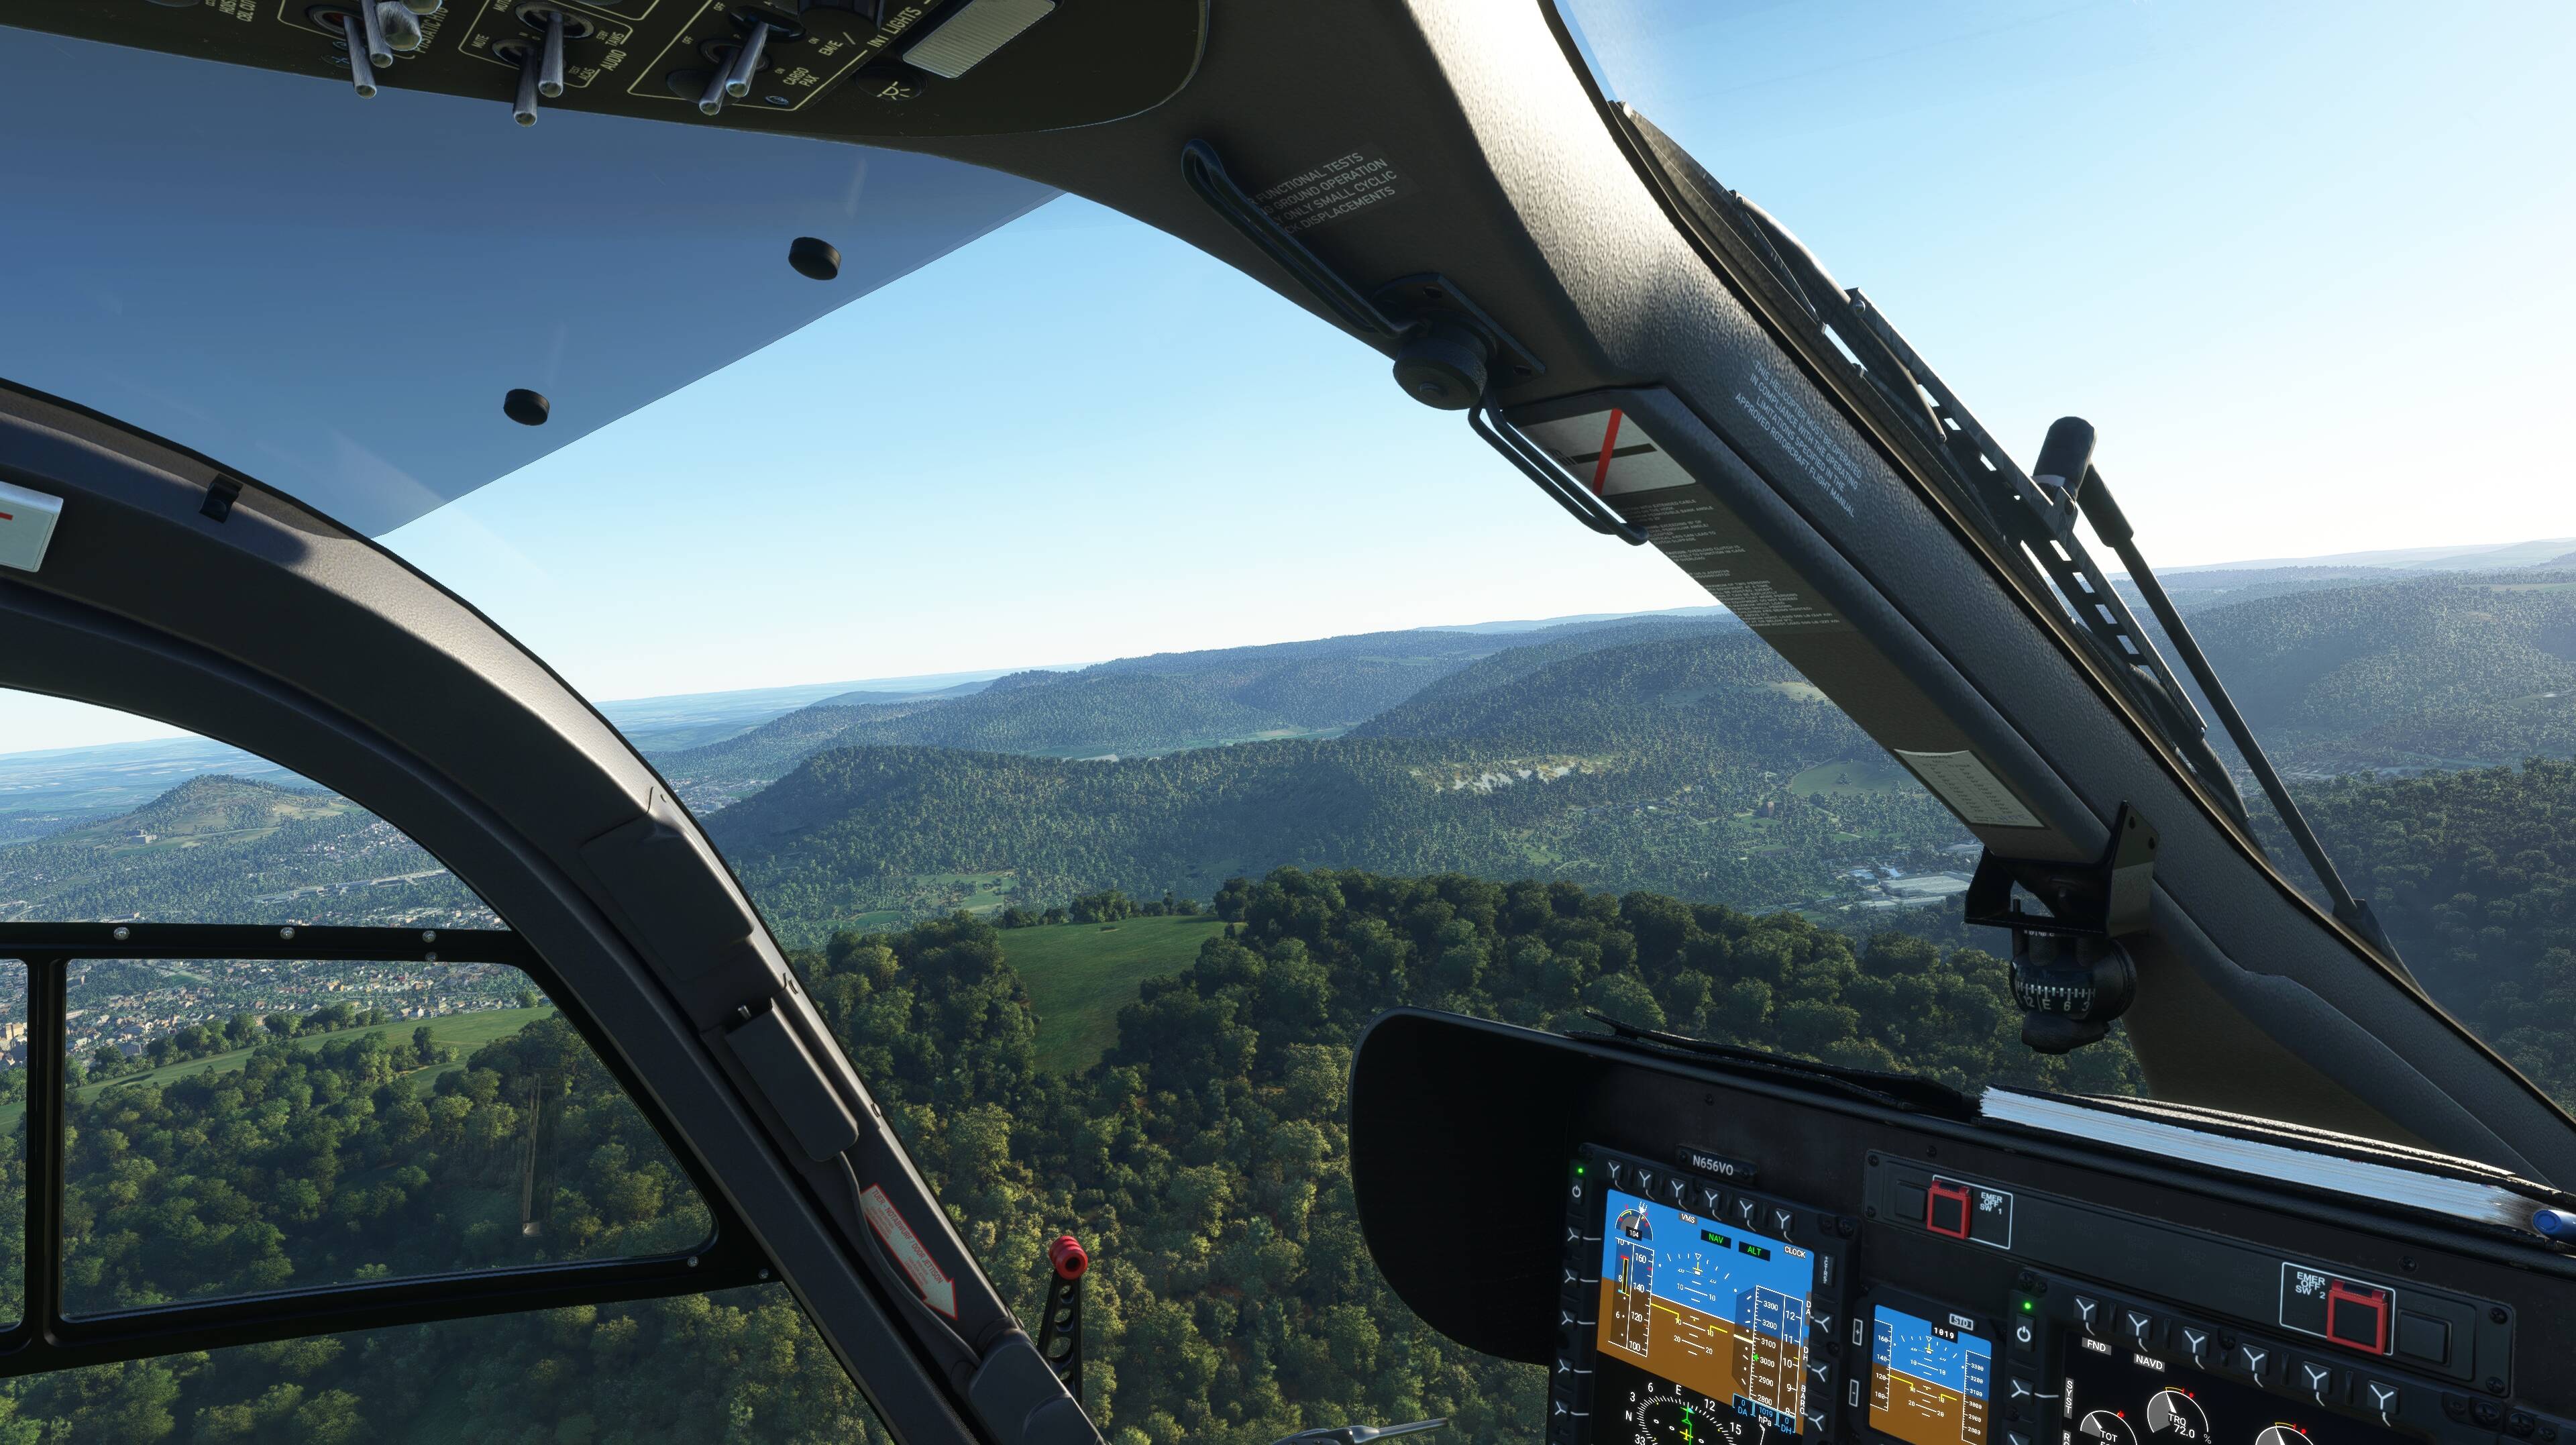 2021-09-07 23_33_05-Microsoft Flight Simulator - 1.19.8.0